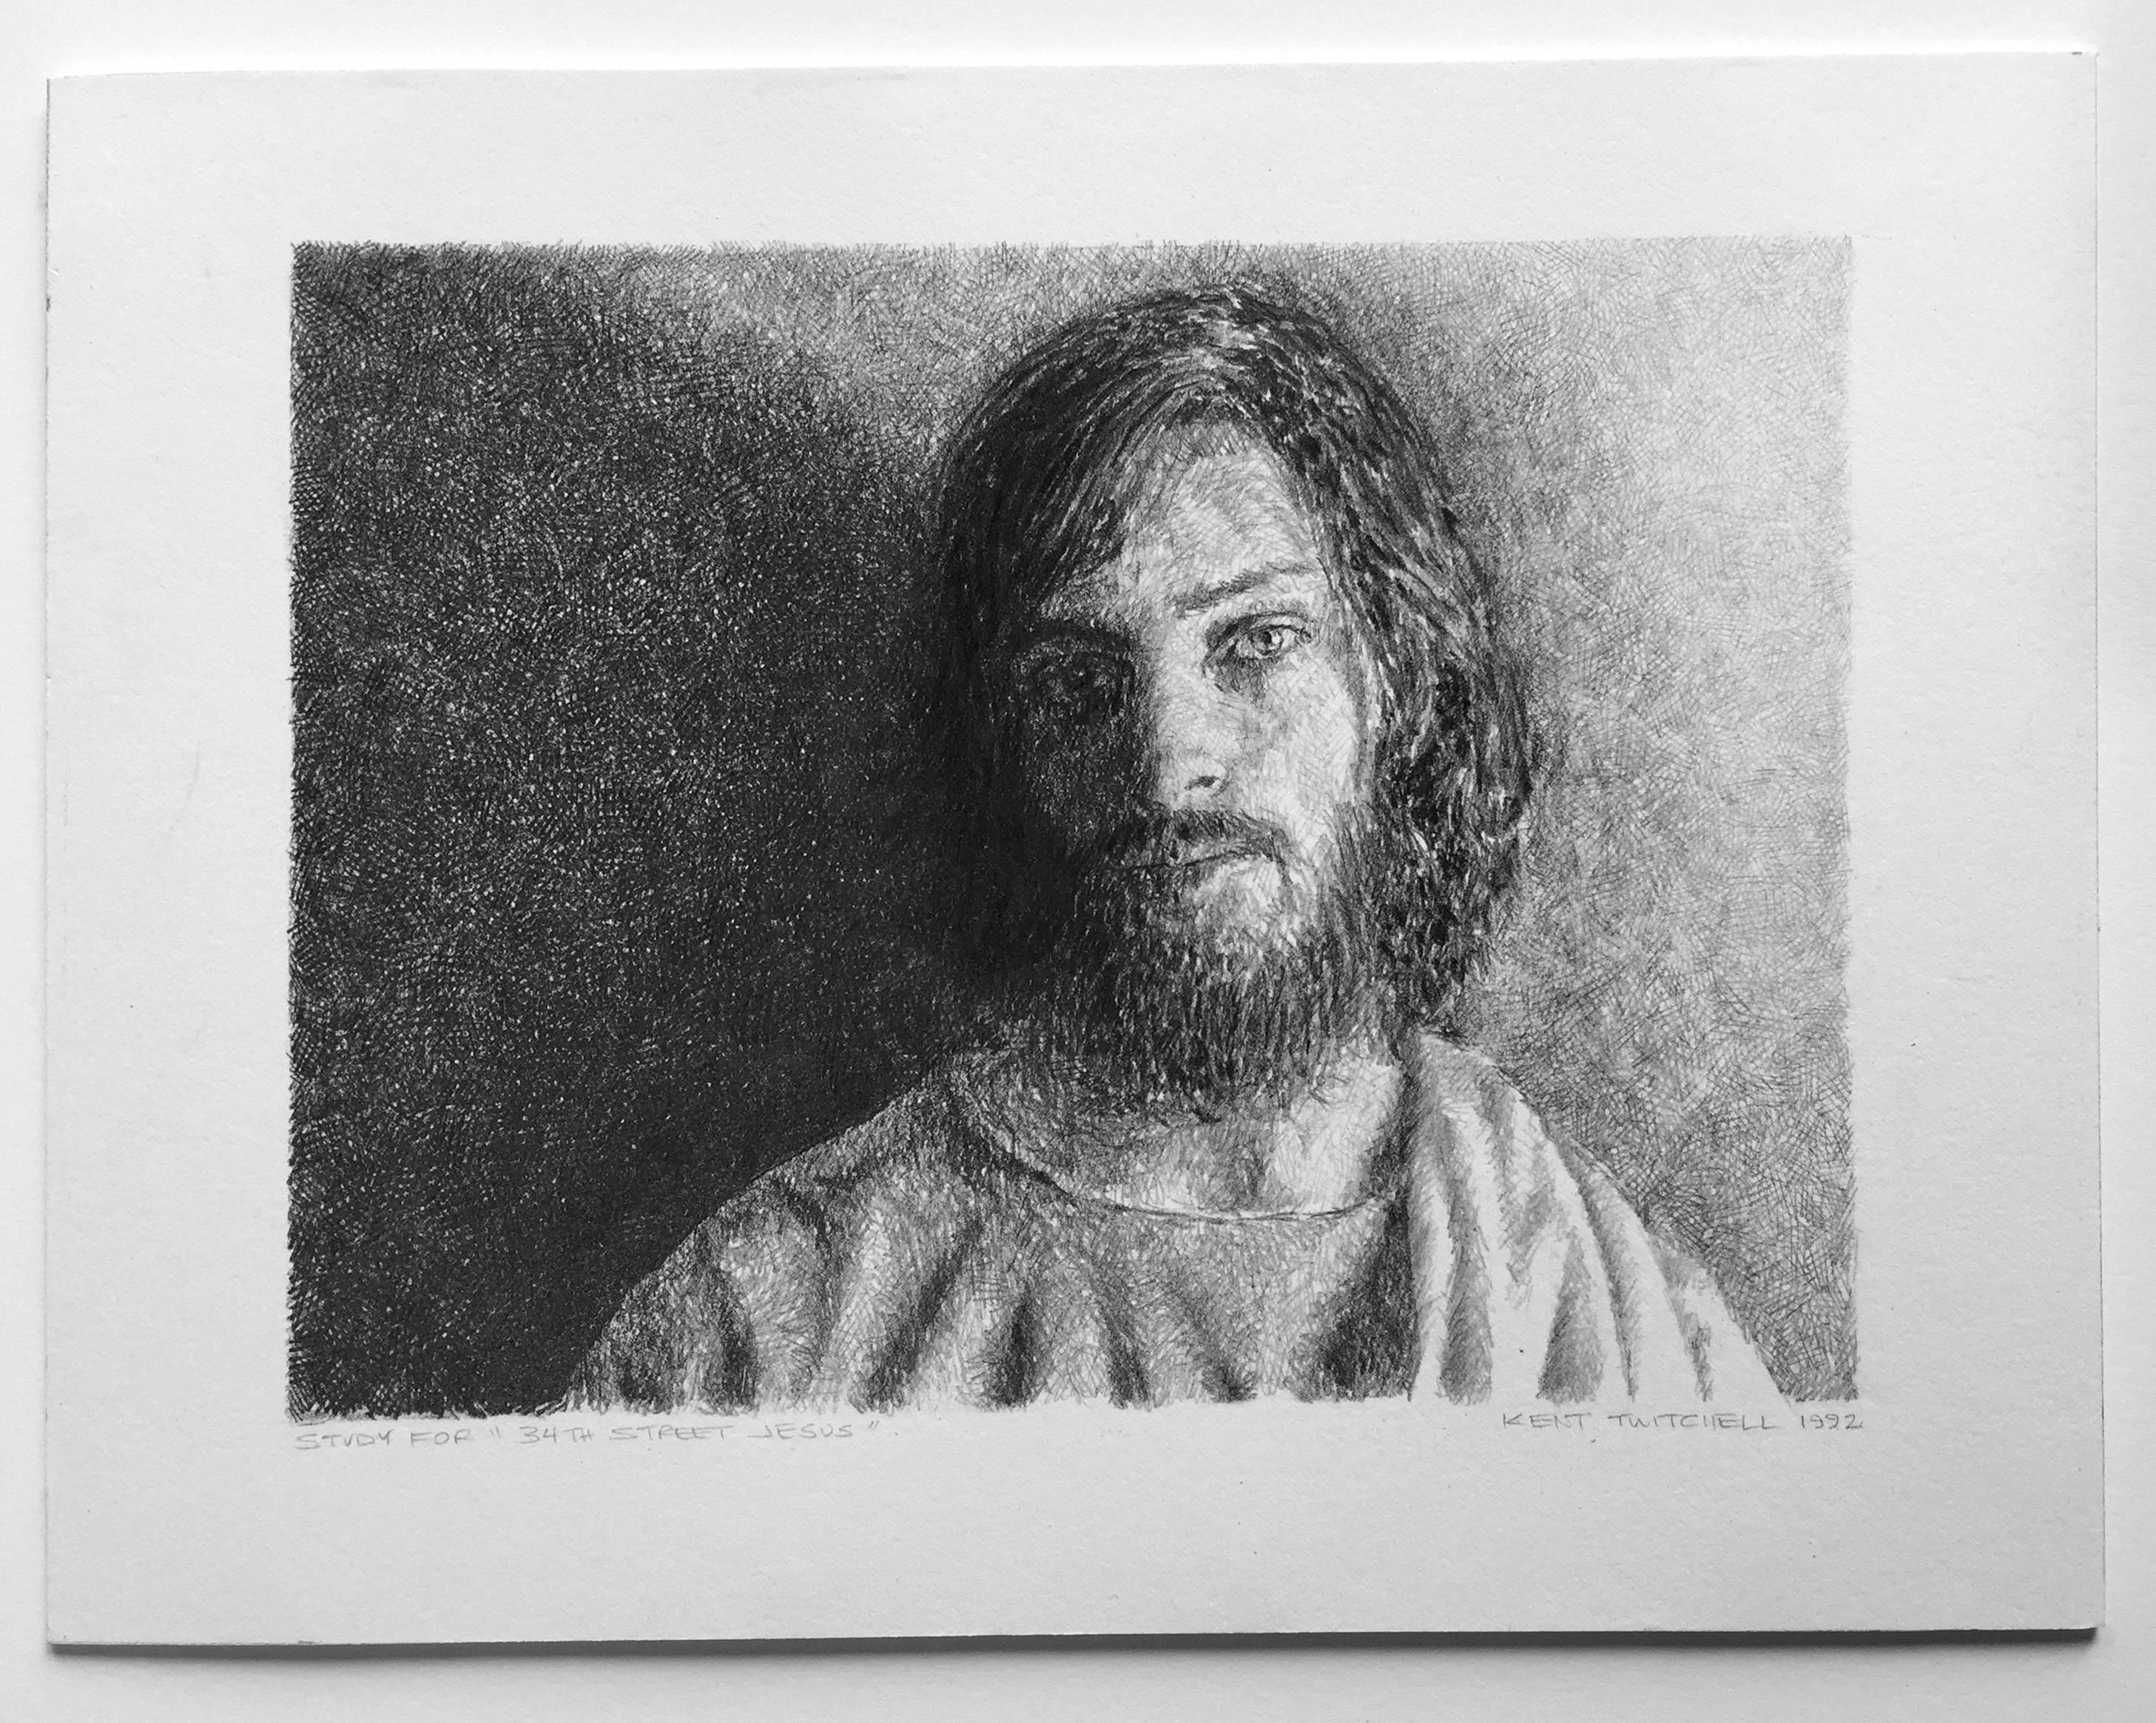 Kent Twitchell Portrait - 34th Street Jesus